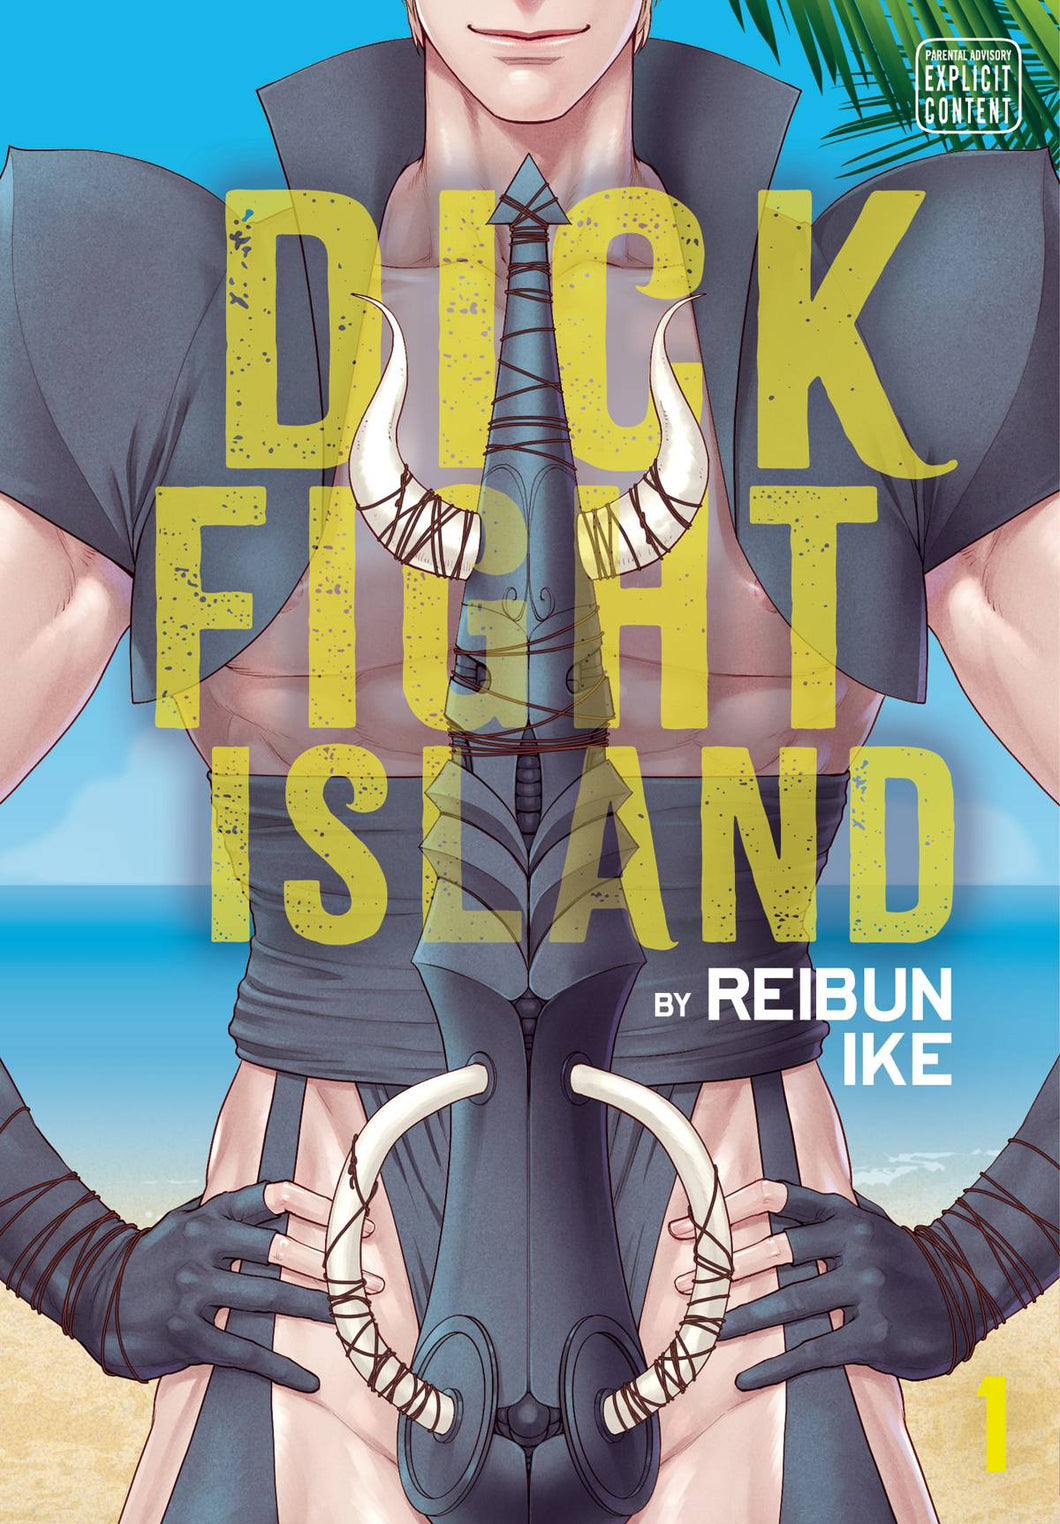 Dick Fight Island GN  Vol 01 - Books